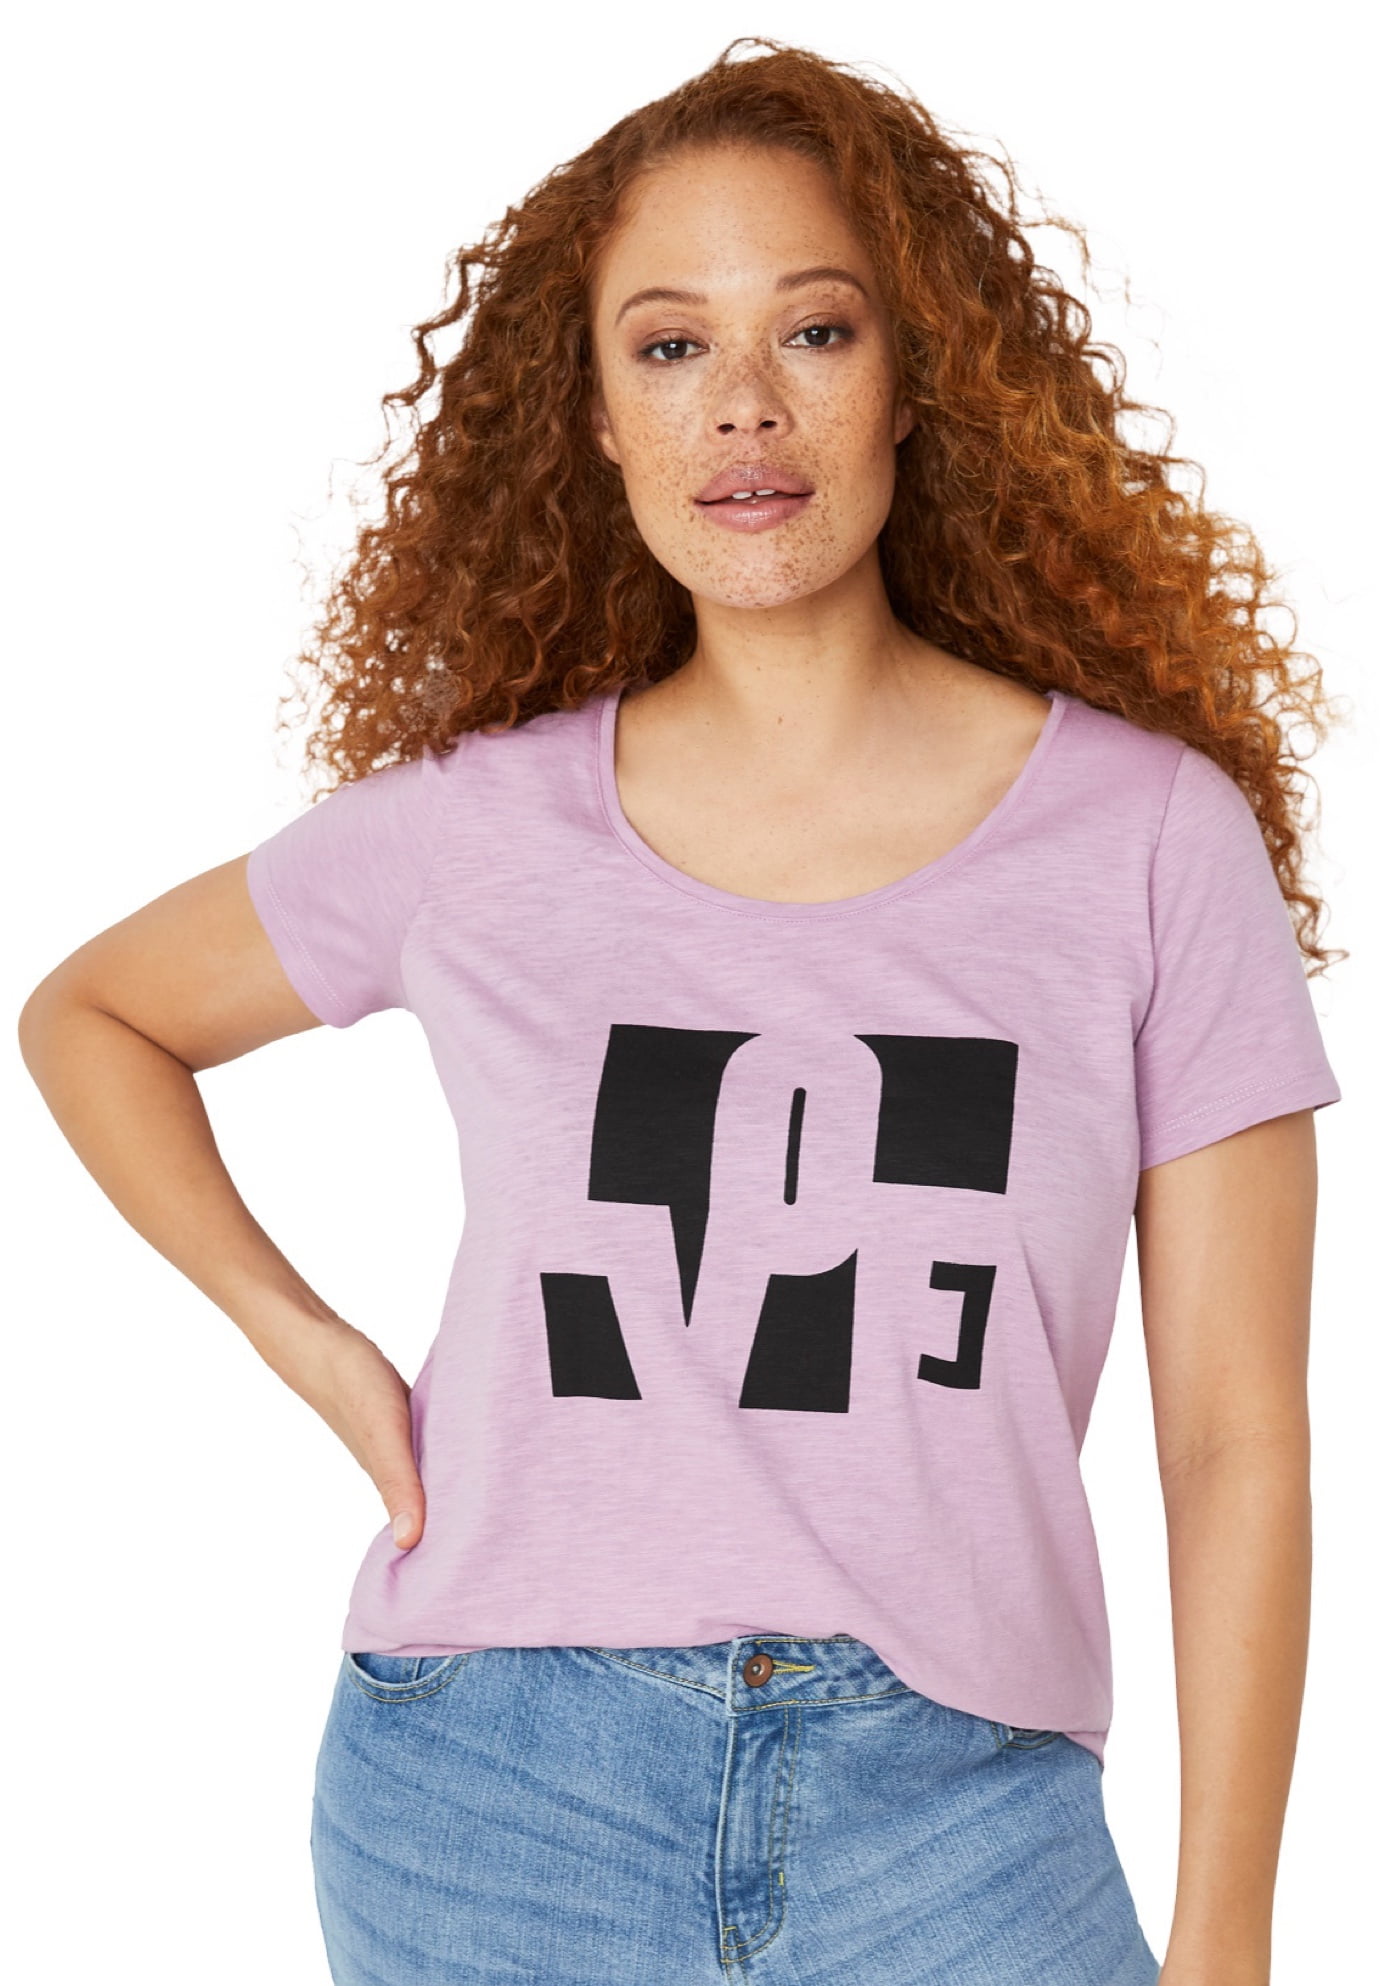 Women's Ellos Tee Shirt - Walmart.com